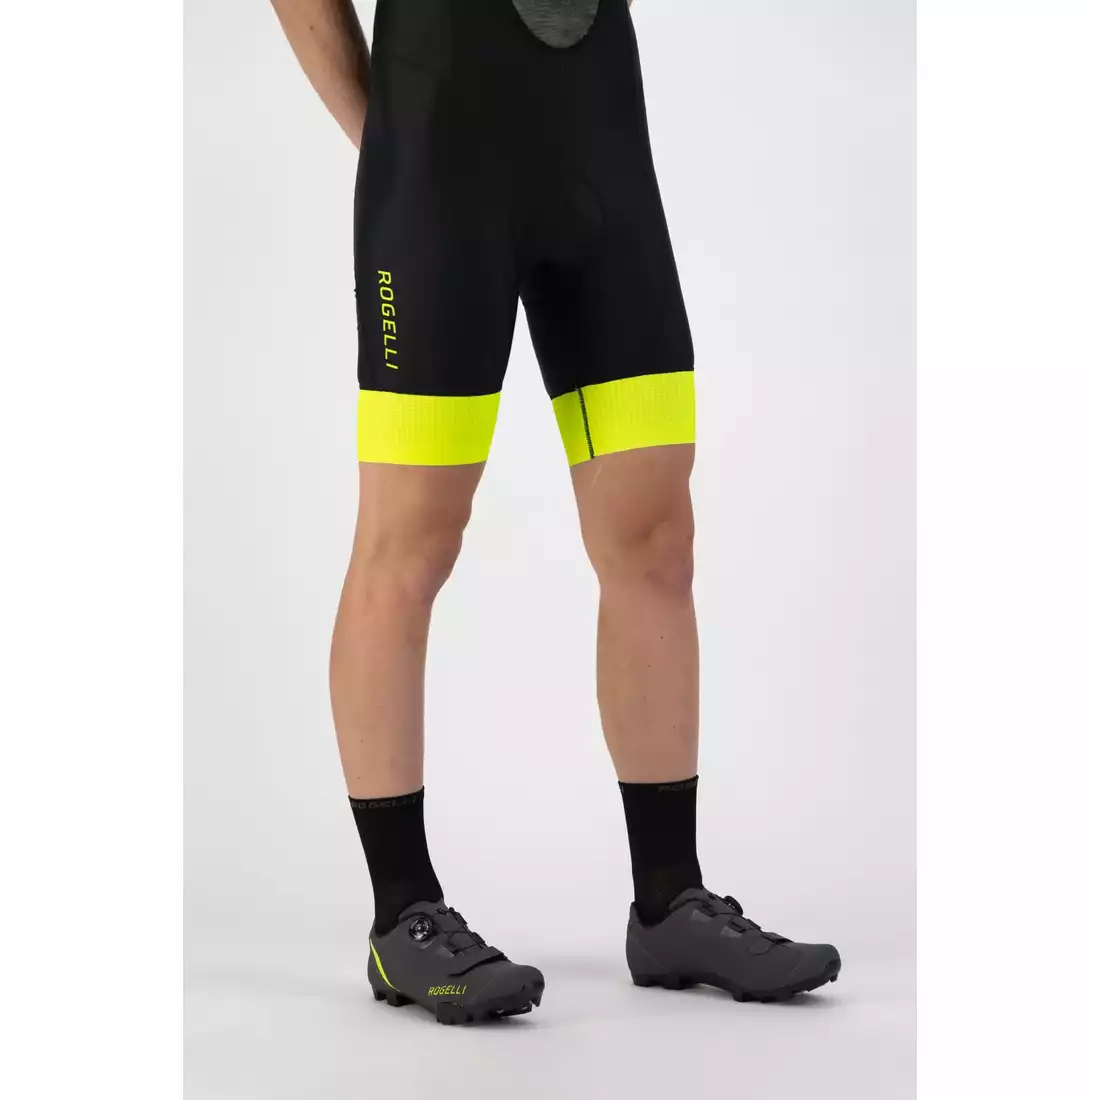 Rogelli MTB R400X pánske MTB cyklistické topánky, šedo-fluórová žltá